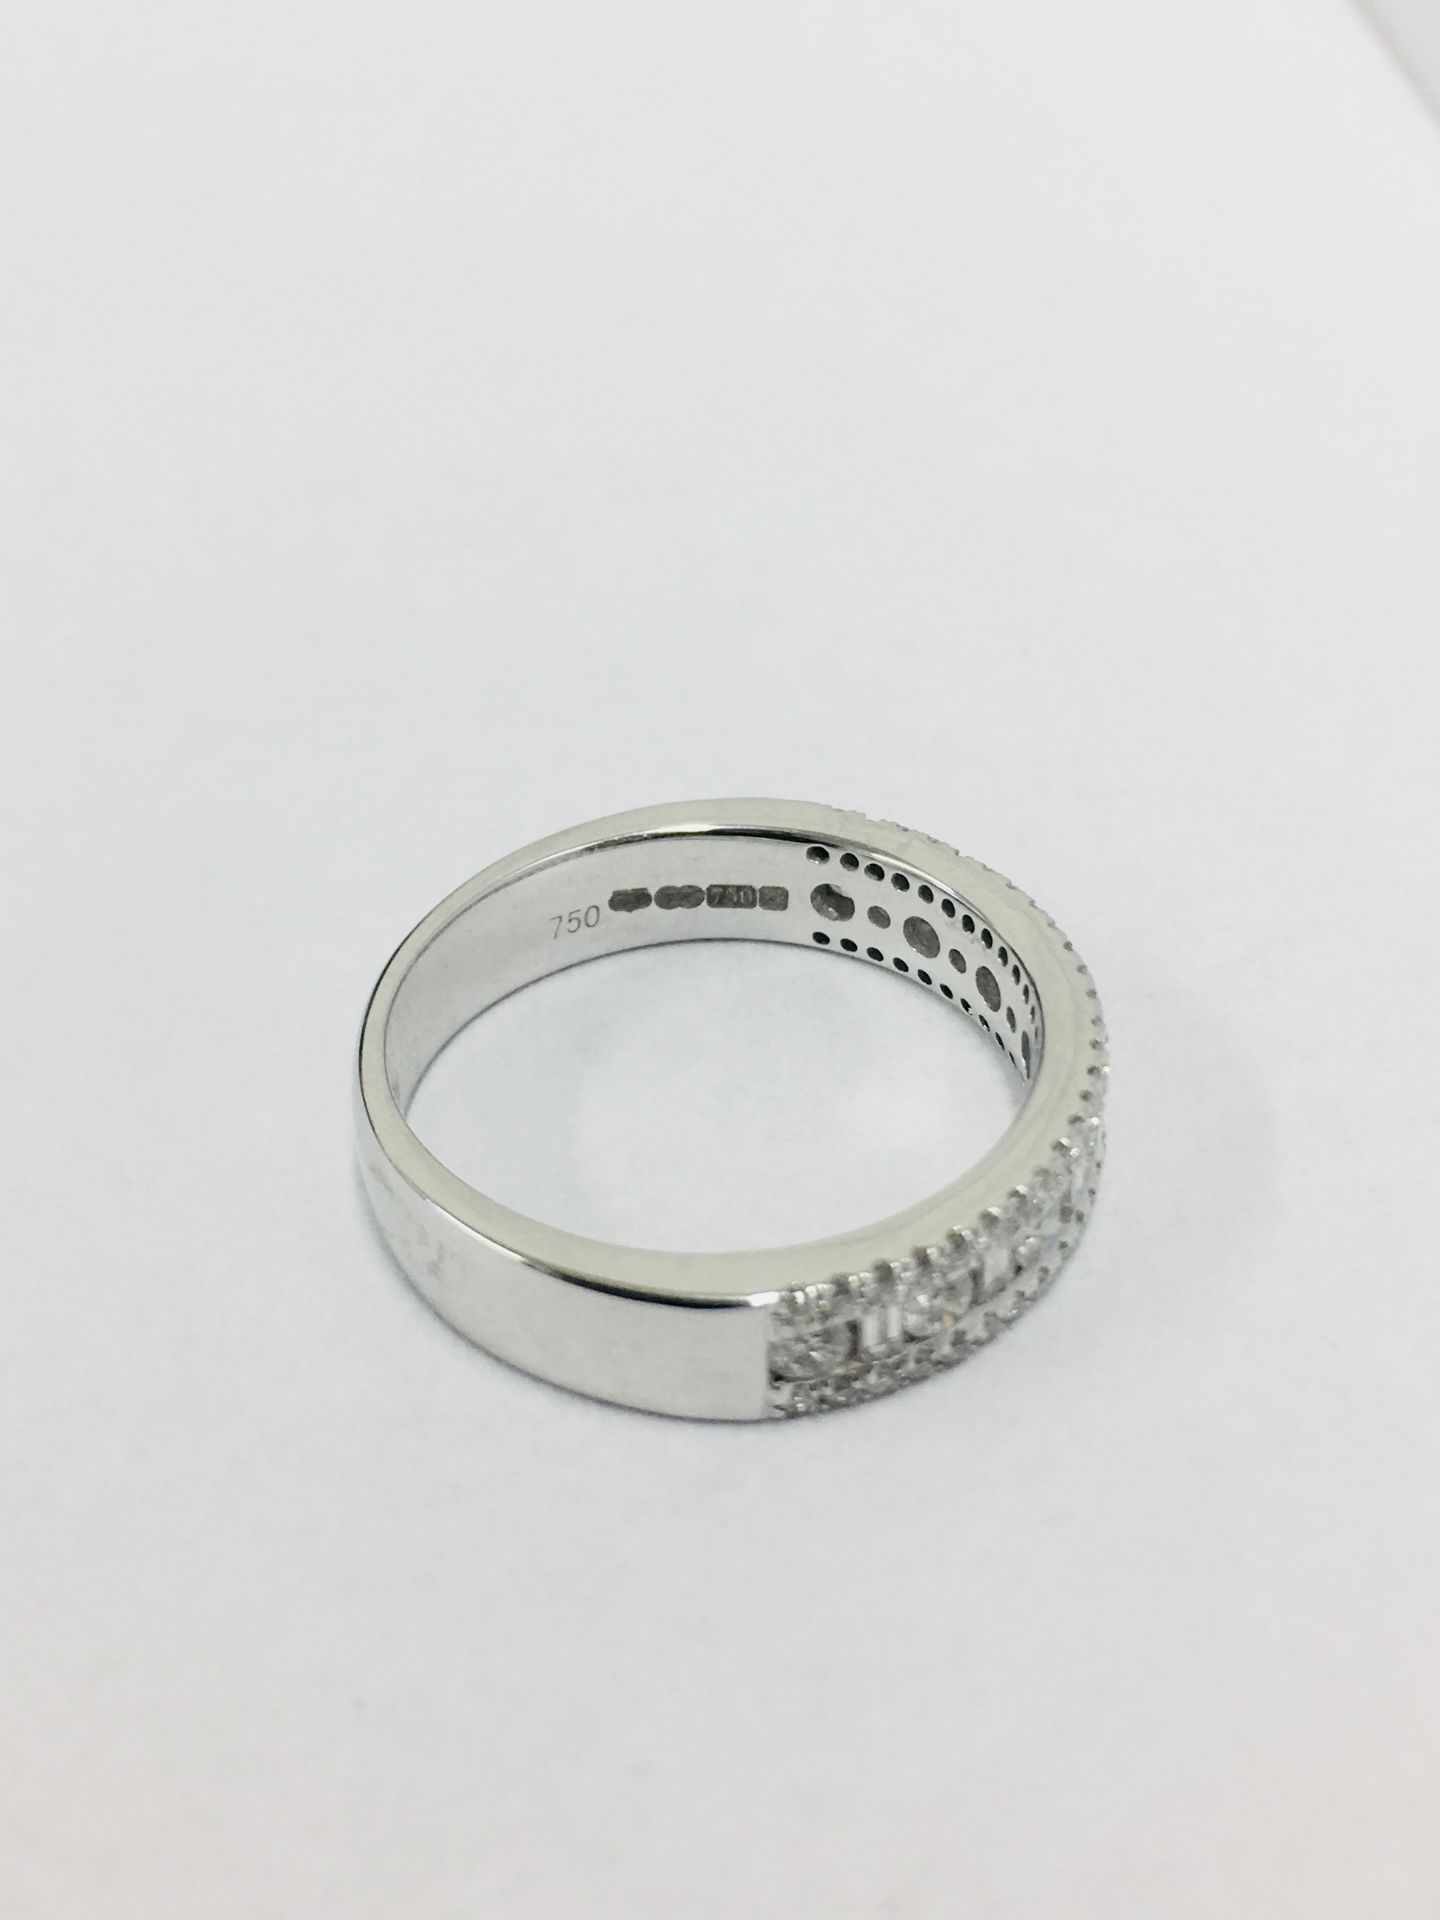 18ct white gold diamond dress ring,0.59ct diamond brilliant cut and baguette damonds h colour vs - Image 4 of 4